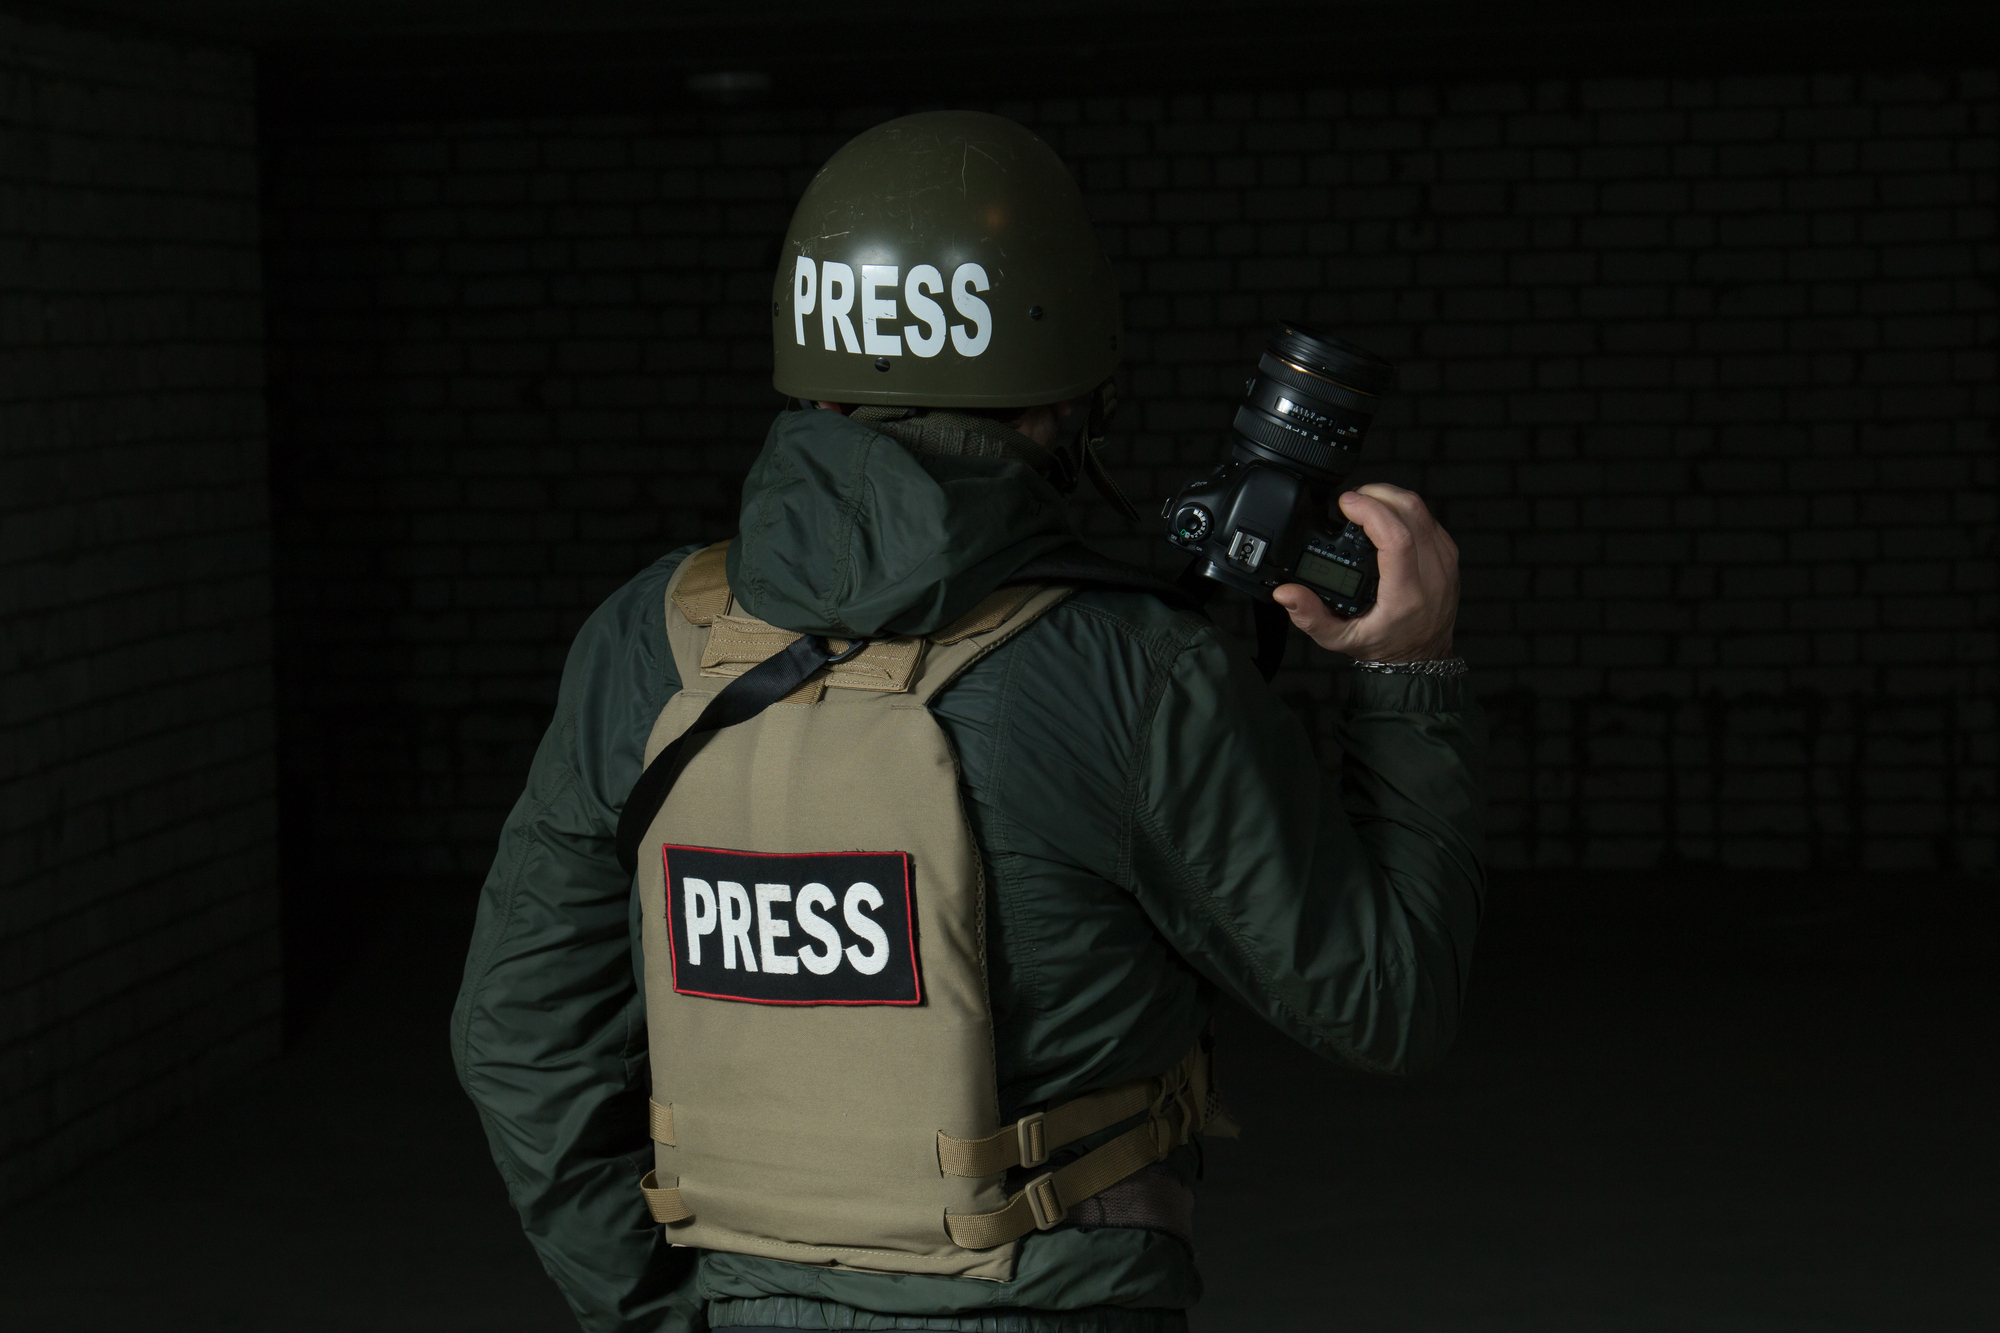 Media in a war zone